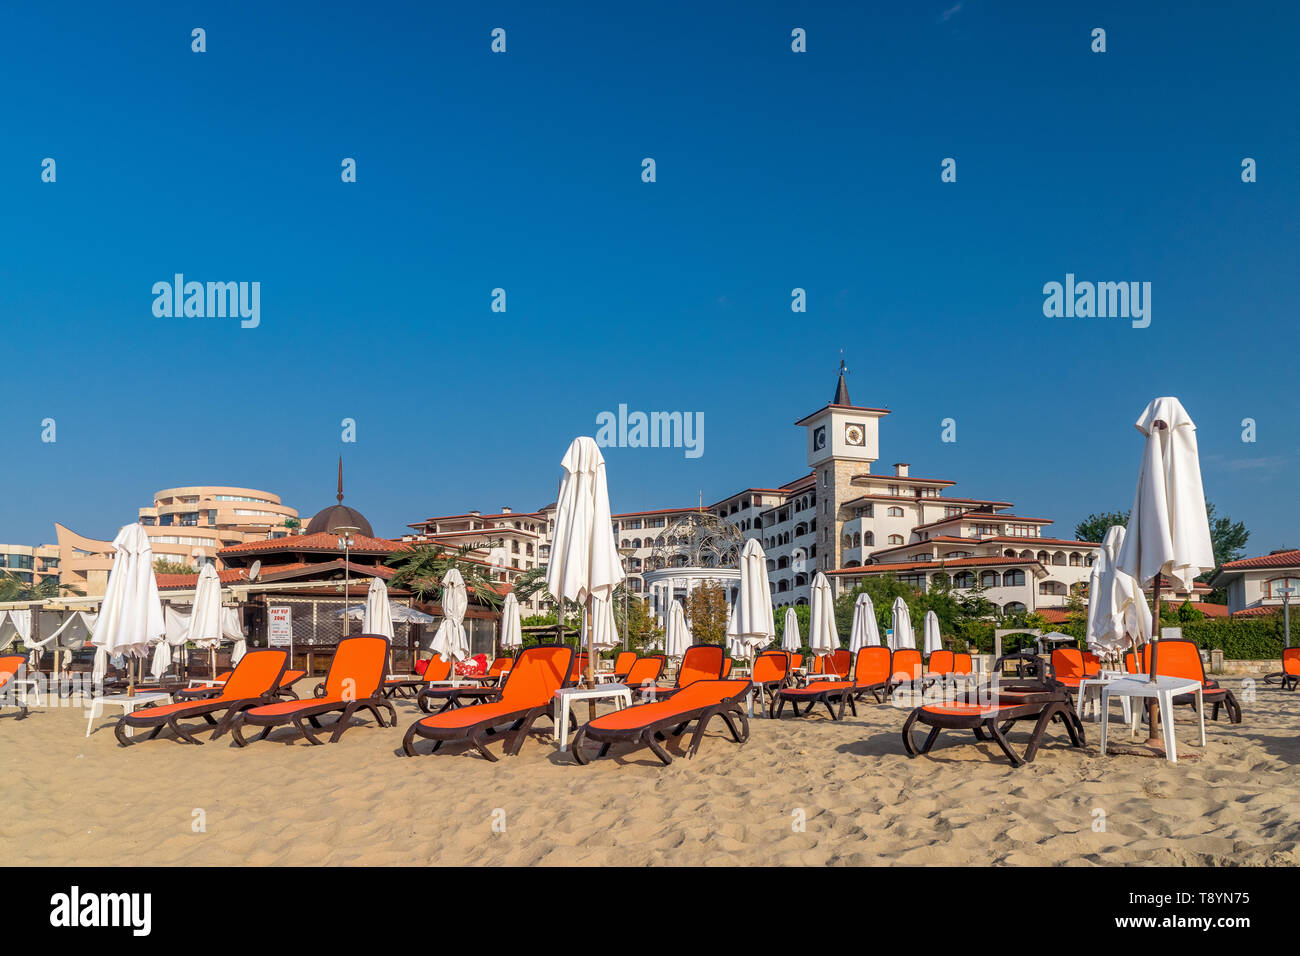 Sunny Beach, Bulgaria - 2 Sep 2018: Umbrellas and chair lounges at Sunny Beach coastline, a major seaside resort on the Black Sea coast of Bulgaria. Stock Photo